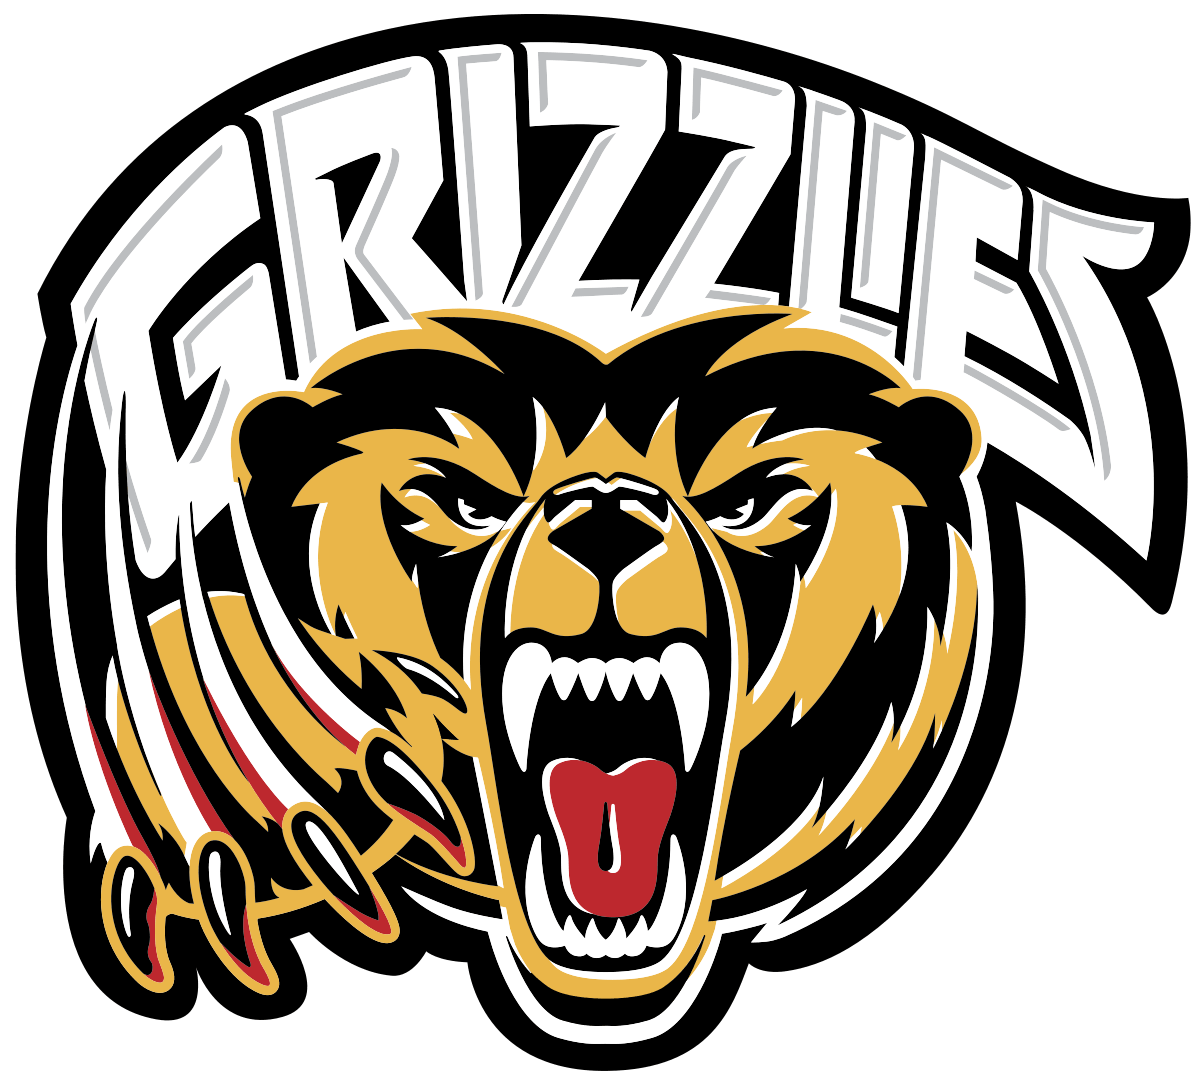 Gizzlies Logo - Victoria Grizzlies